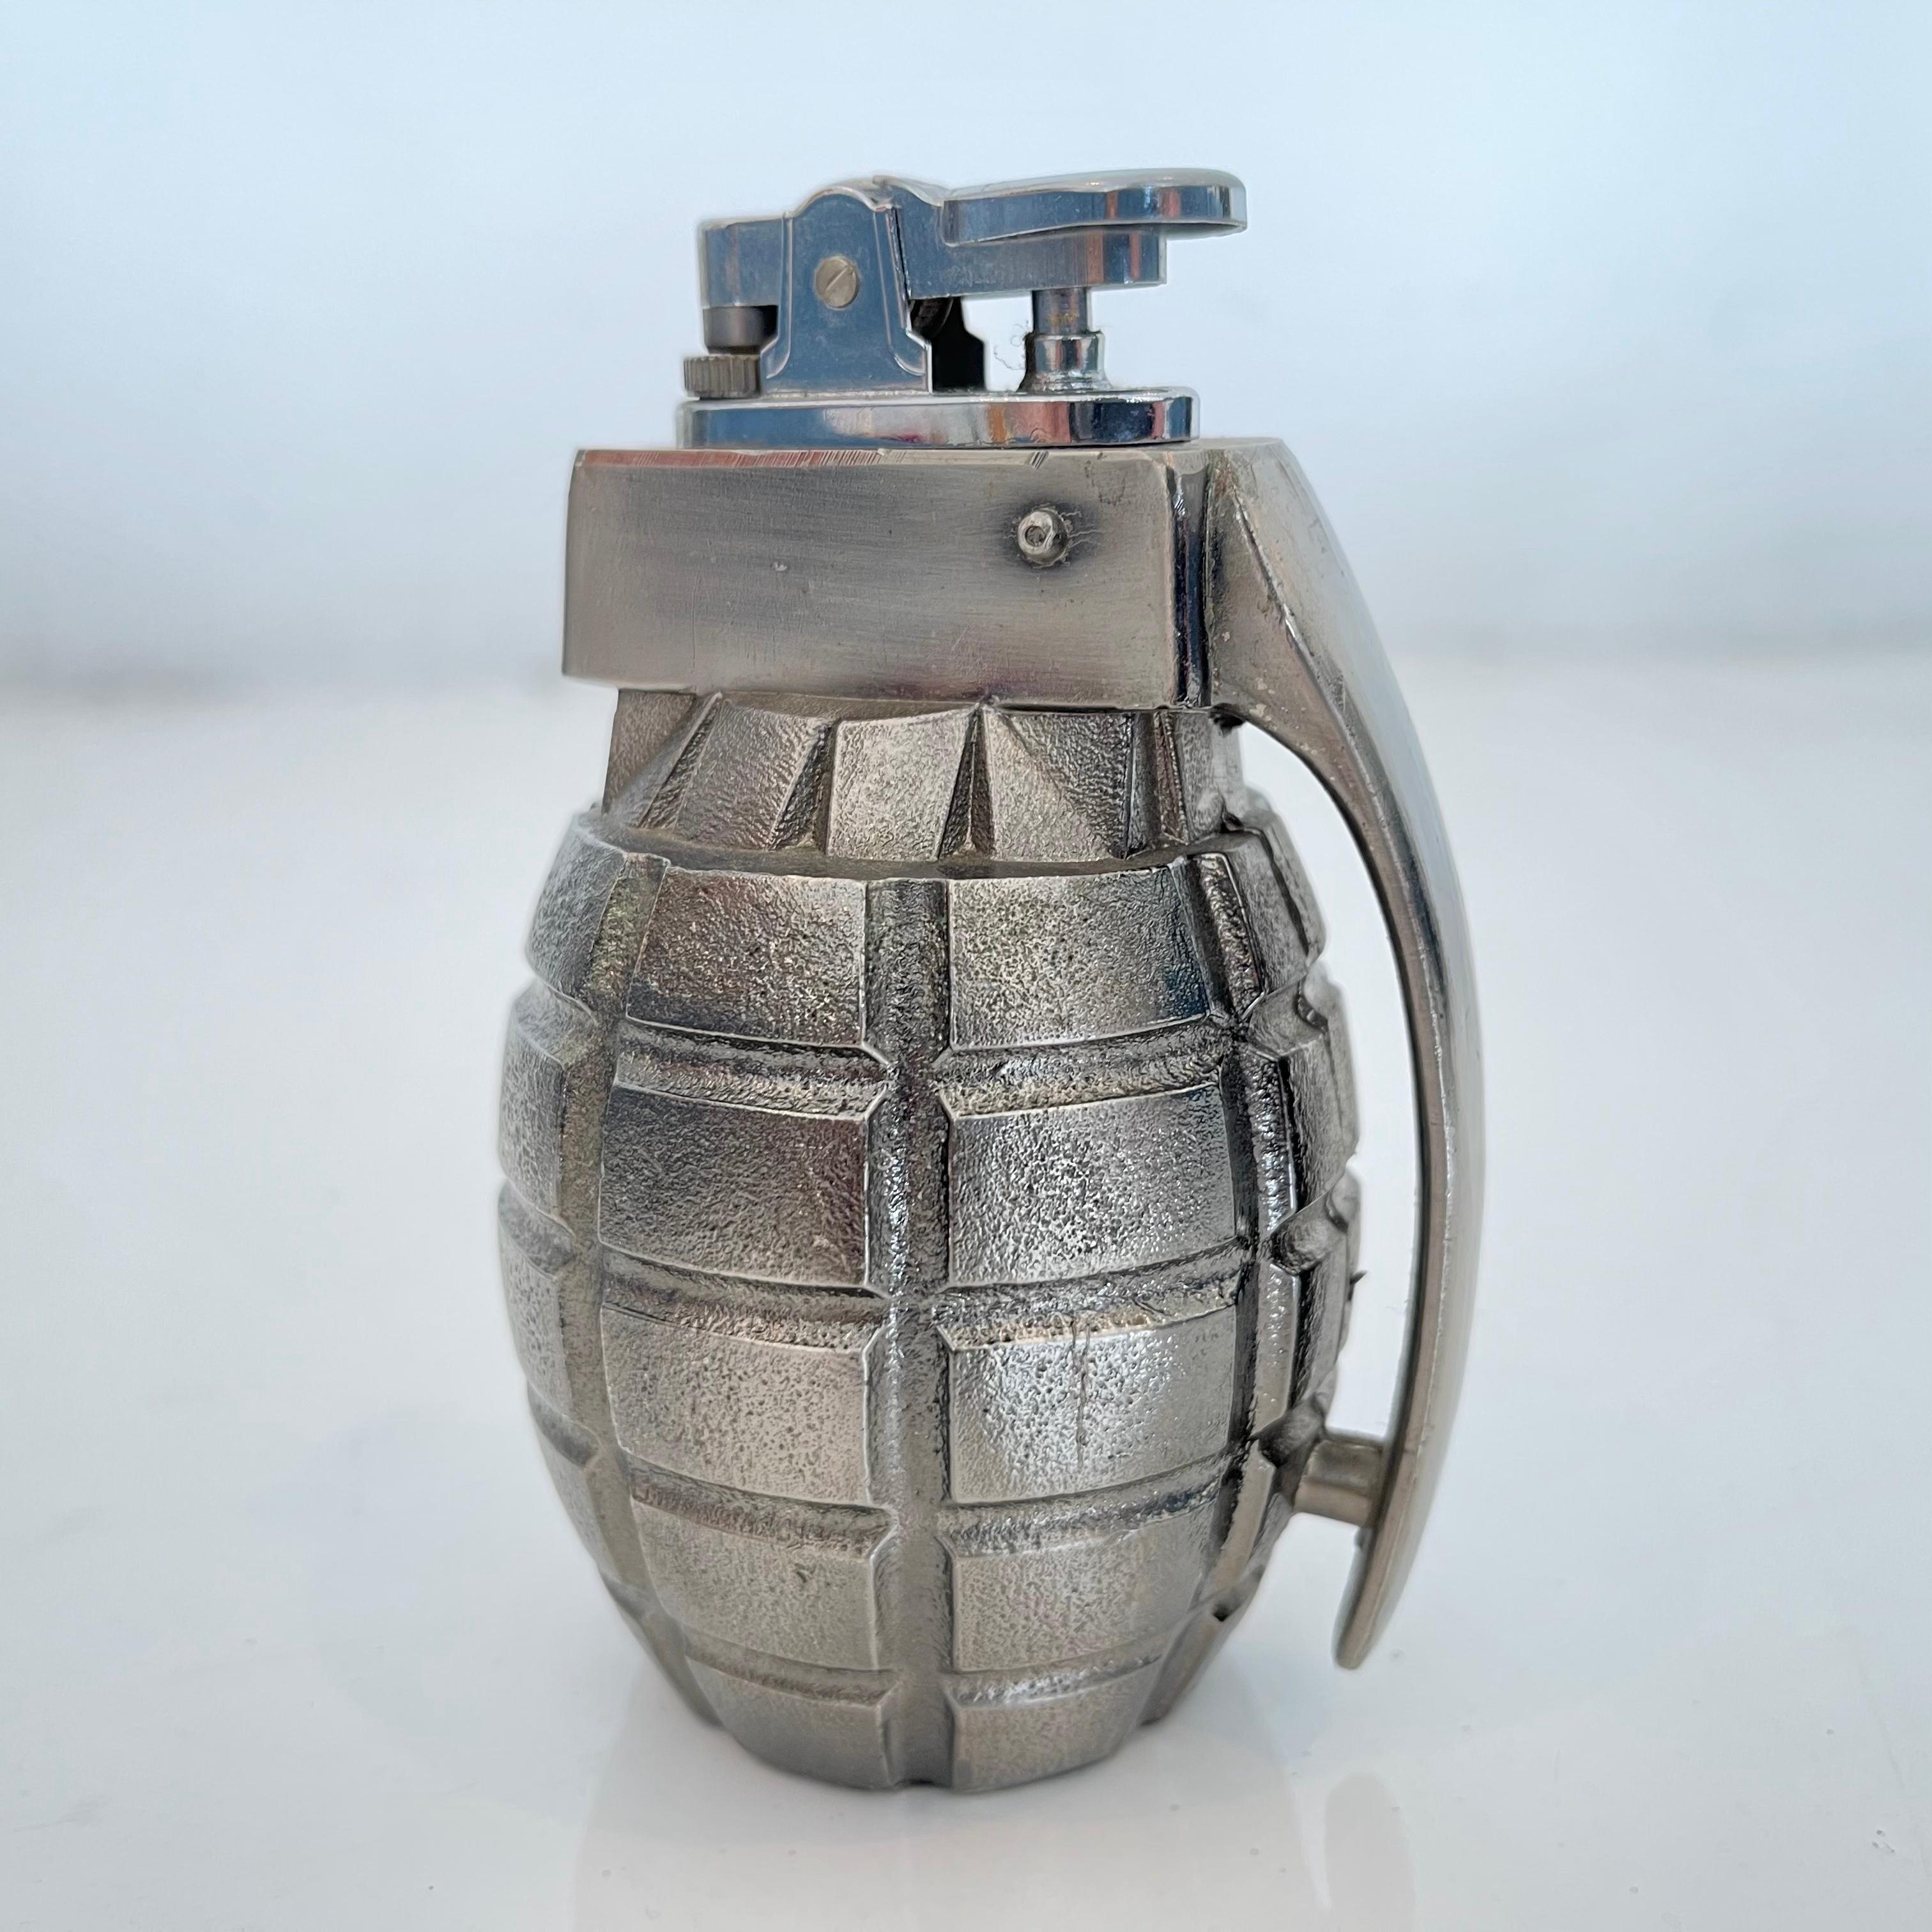 Late 20th Century Japanese Grenade Lighter